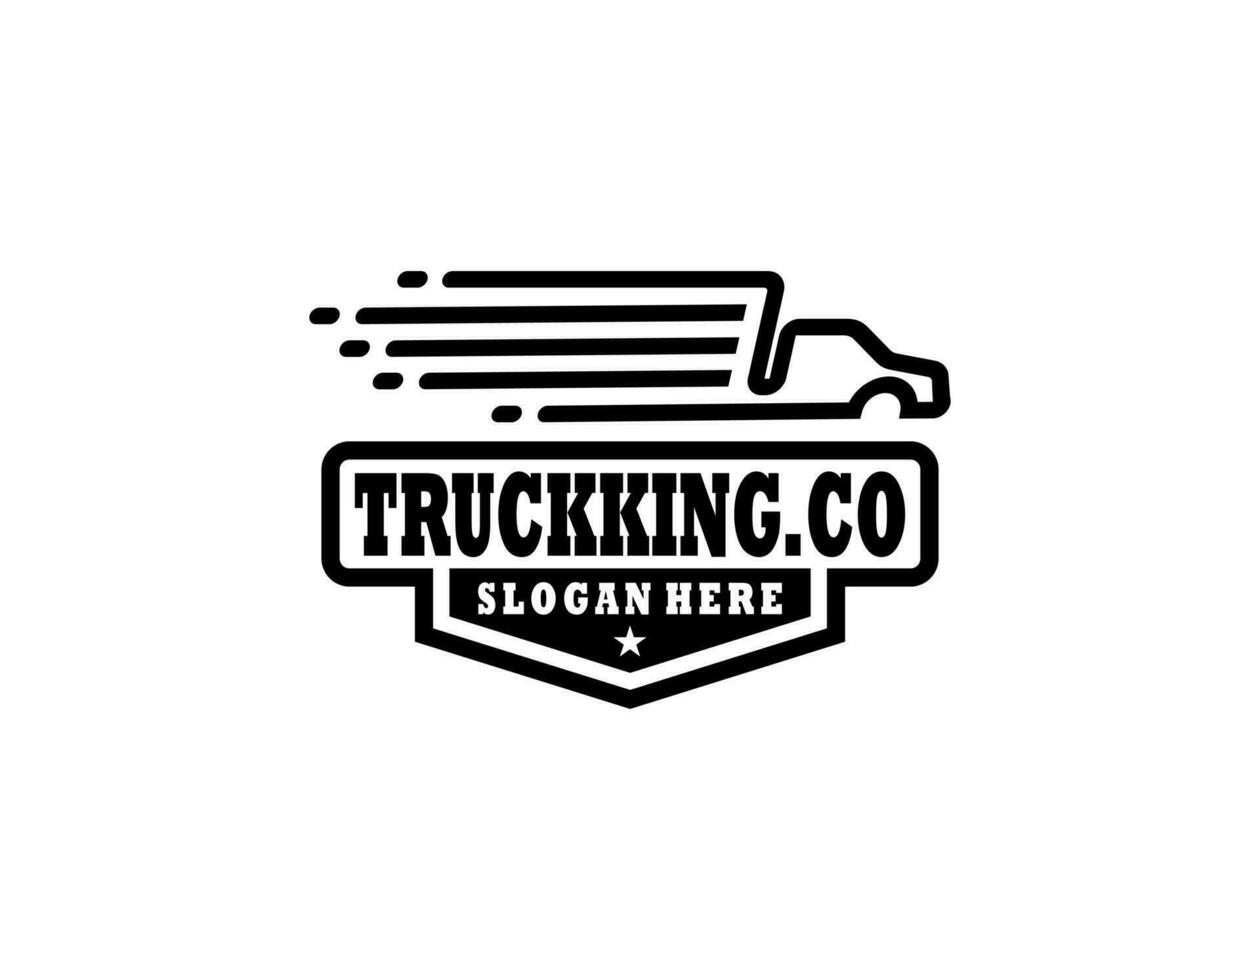 camionaje empresa logo. Perfecto logo para camionaje industria. vector ilustración. transporte camionaje logo vector. camión logo diseño.